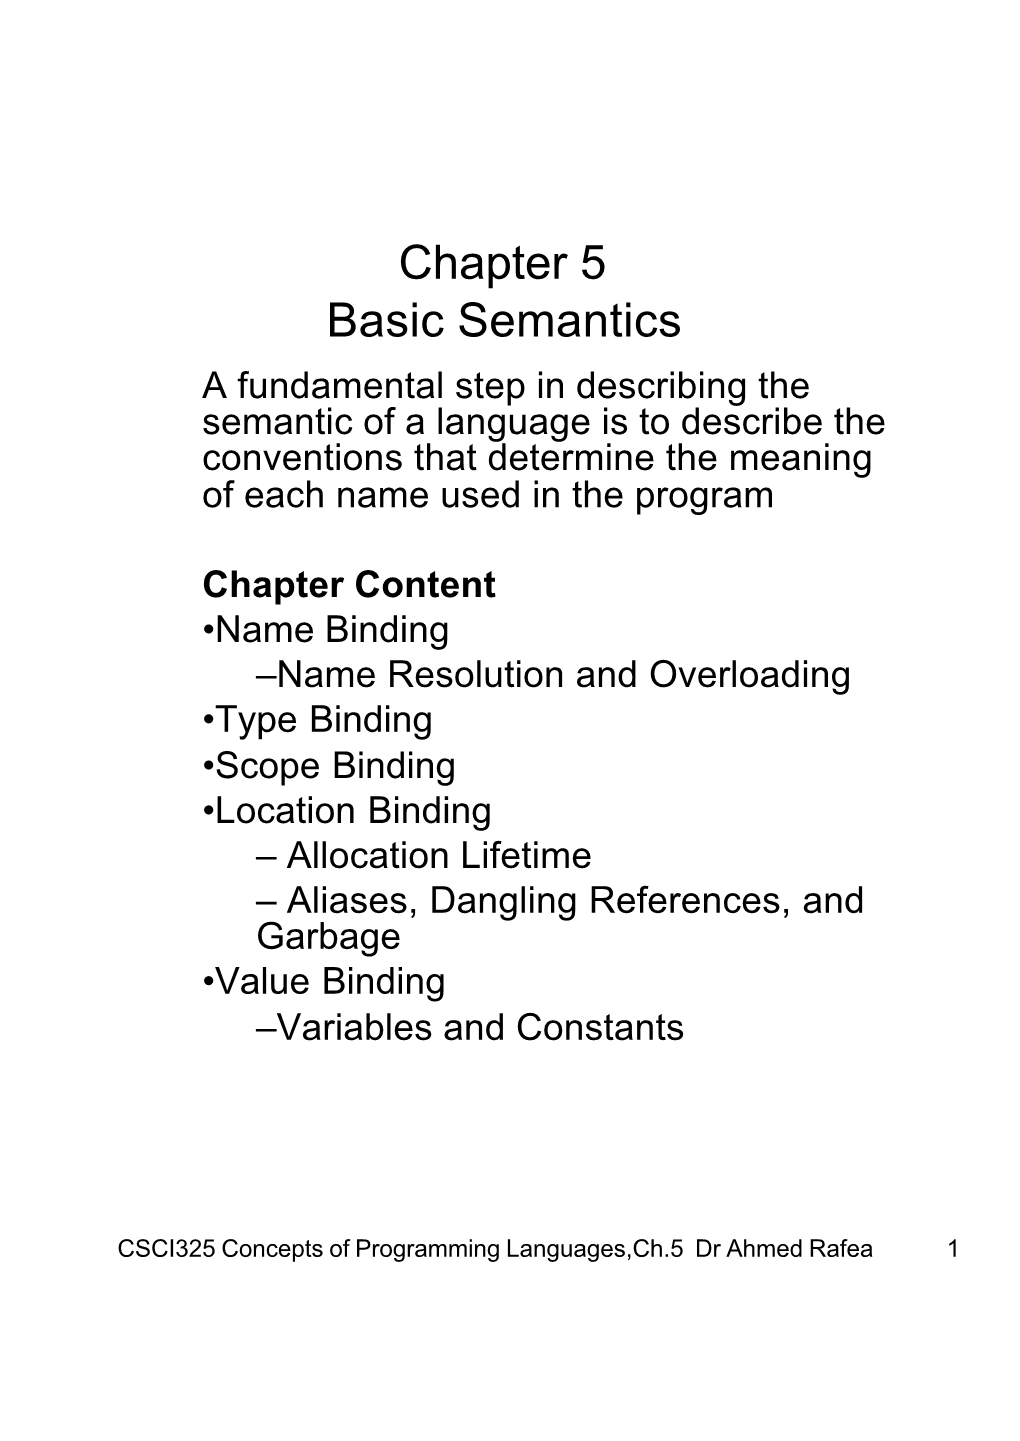 Chapter 5 Basic Semantics